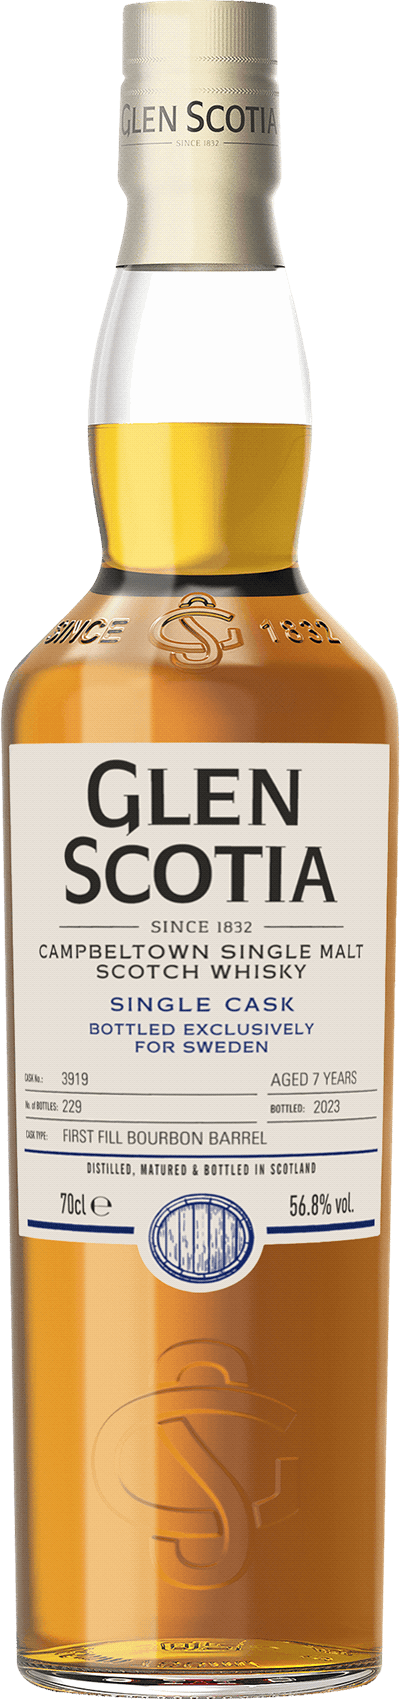 Glen Scotia Single Cask